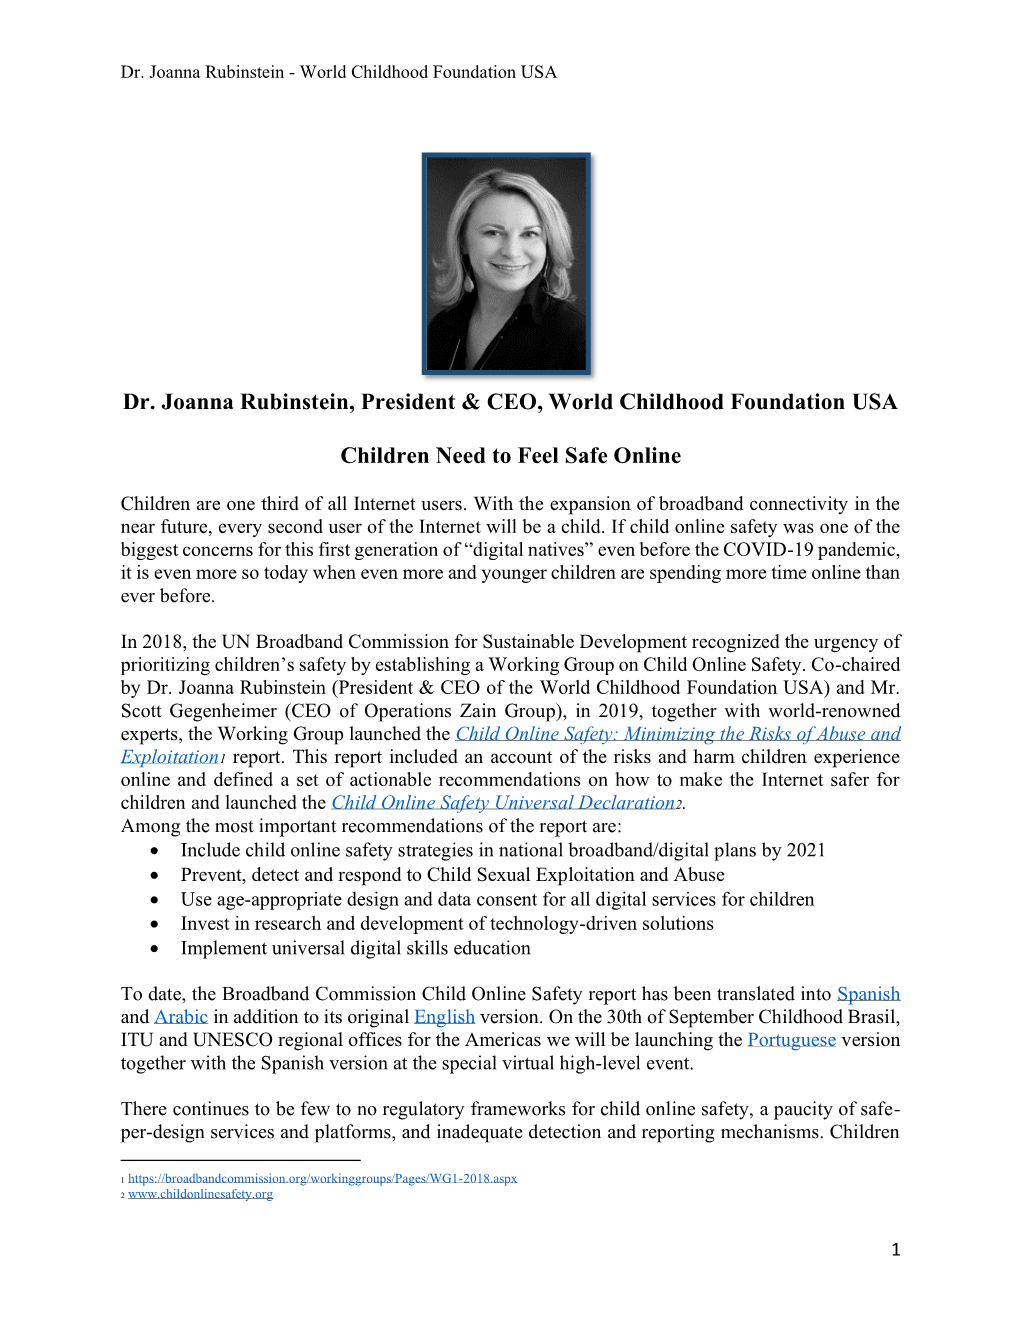 Dr. Joanna Rubinstein, President & CEO, World Childhood Foundation